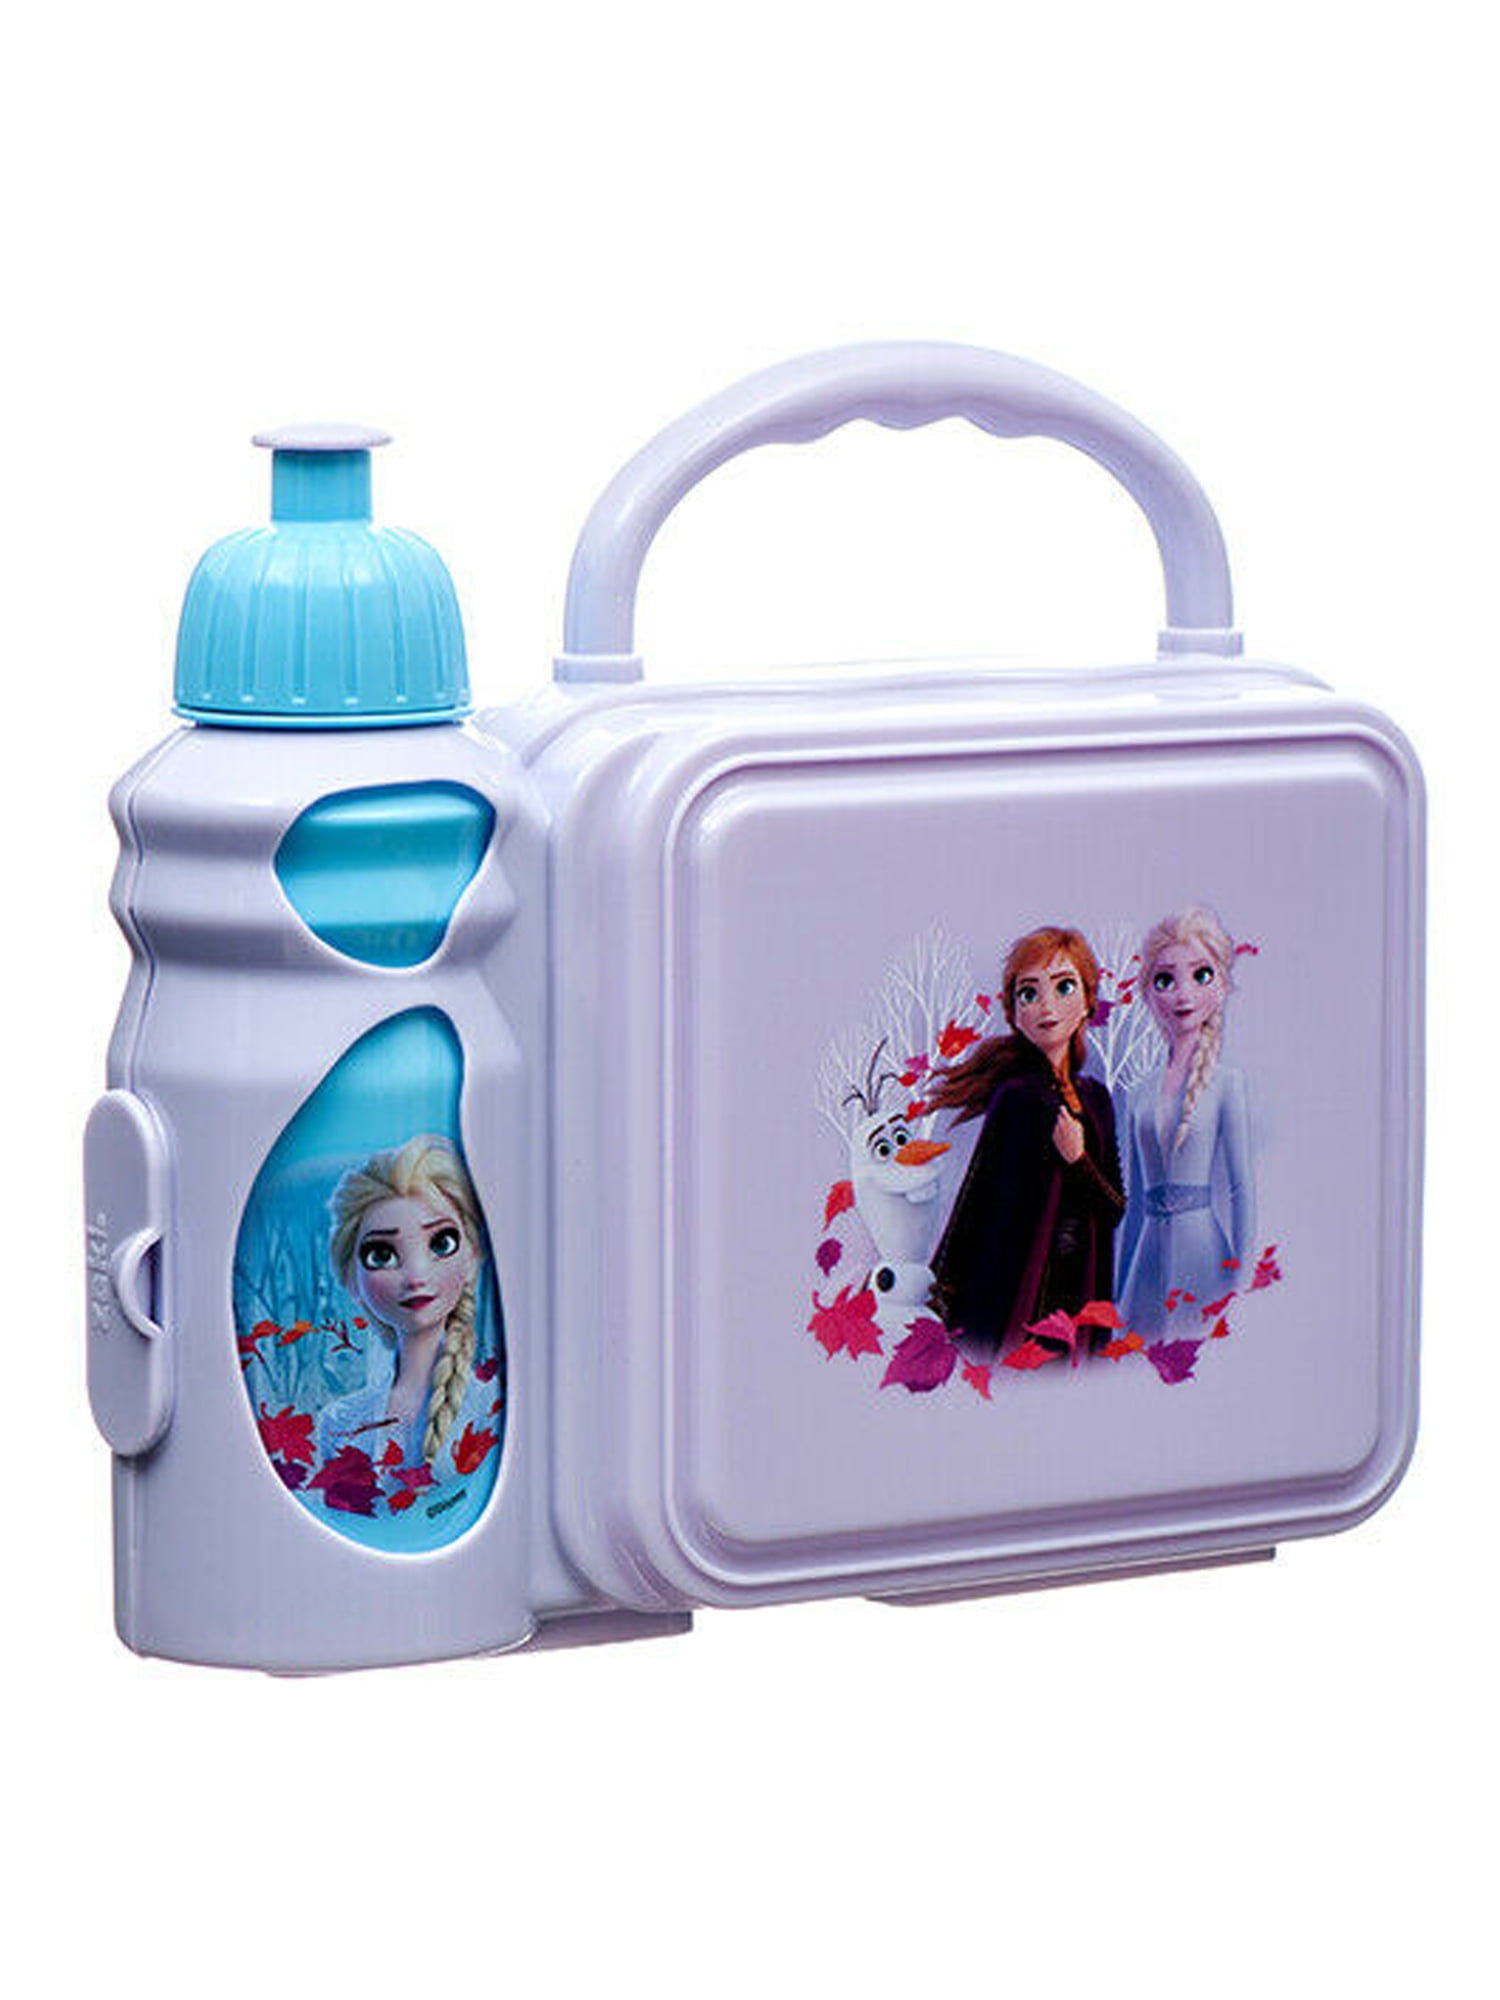 Disney's Frozen Lunch Box - 678634288301